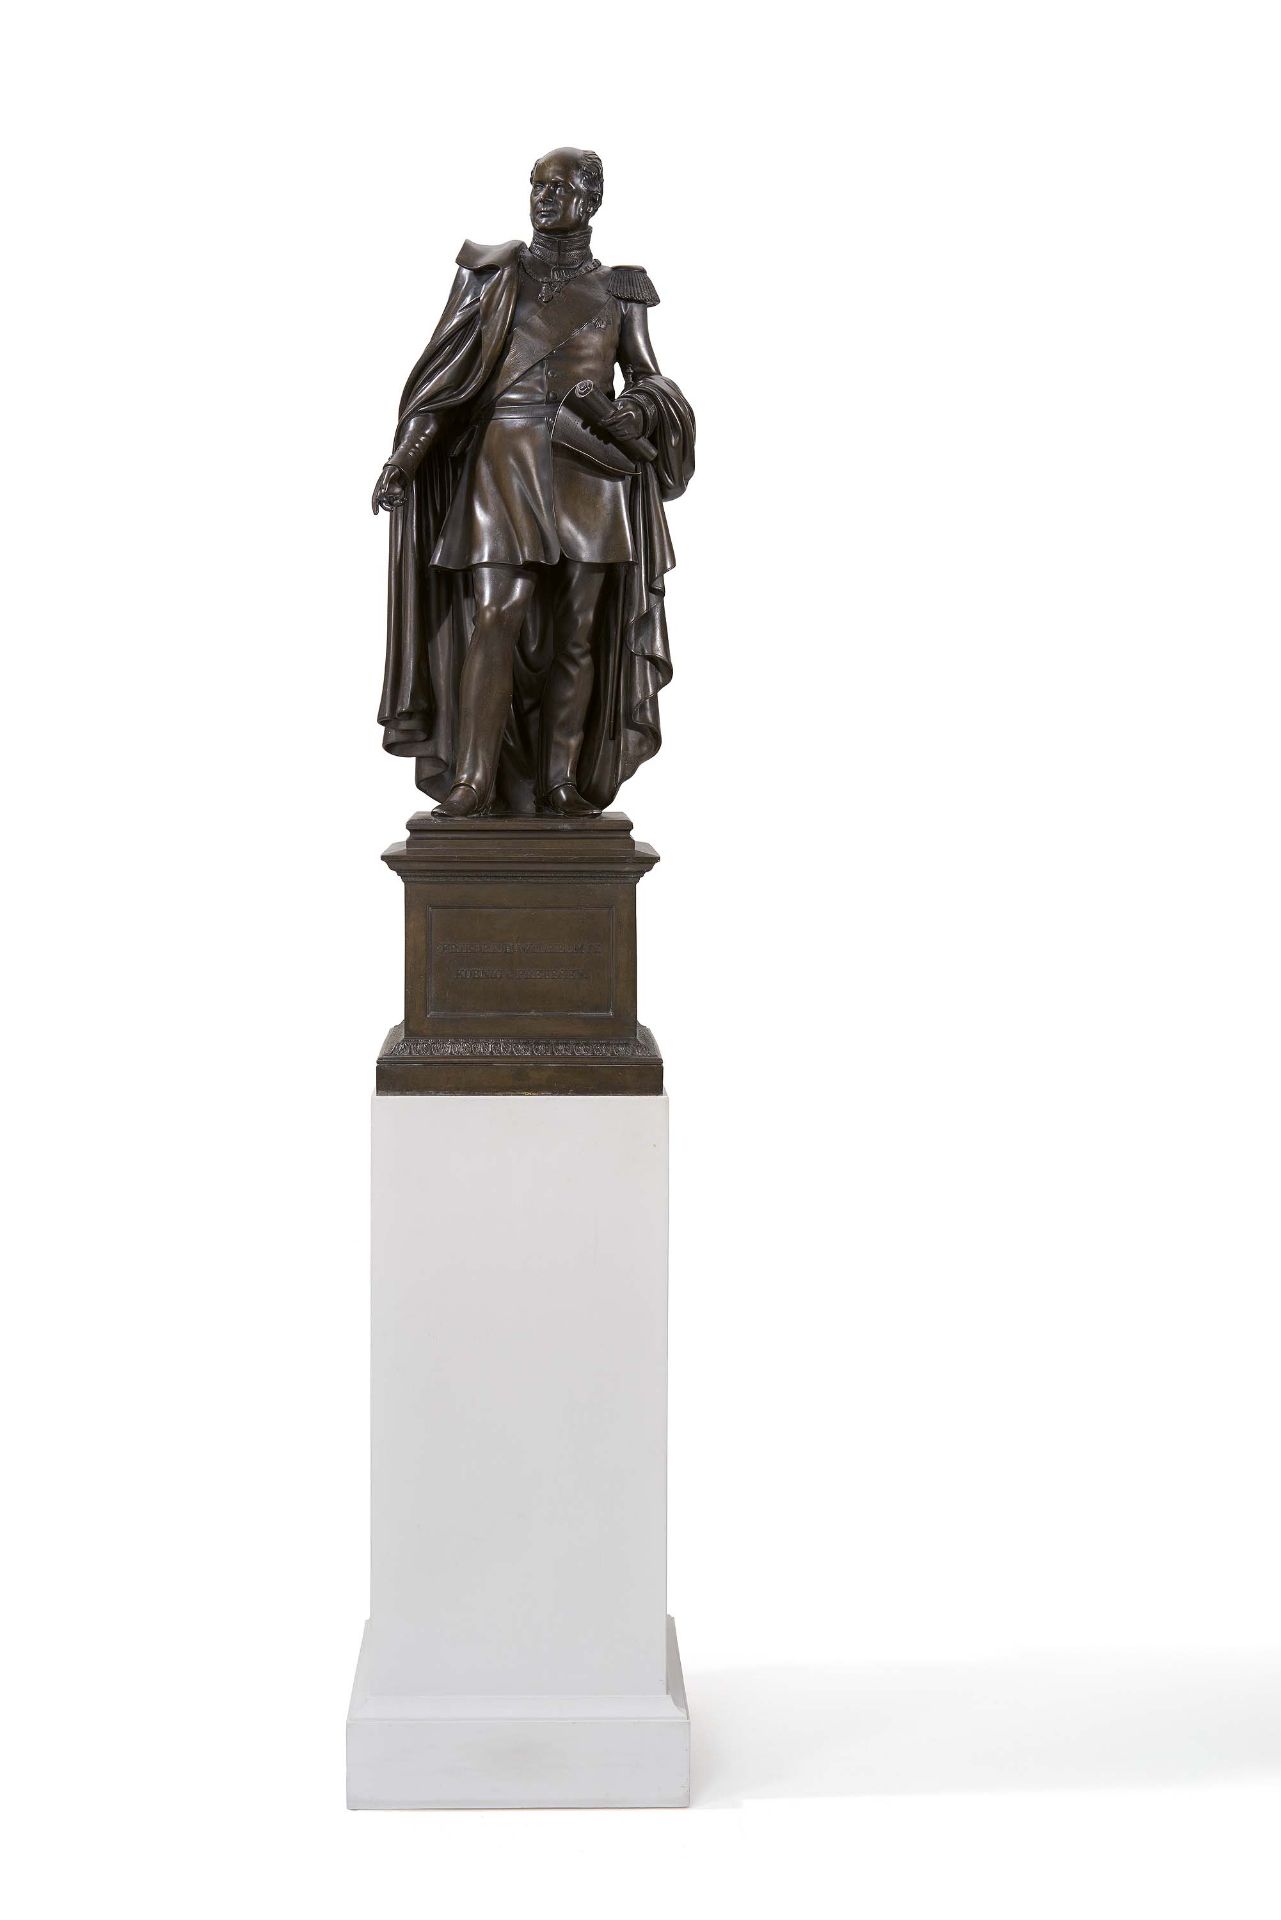 Carl Cauer 1828 Bonn - 1885 Bad Kreuznach: Statue of King Frederick William IV of Prussia